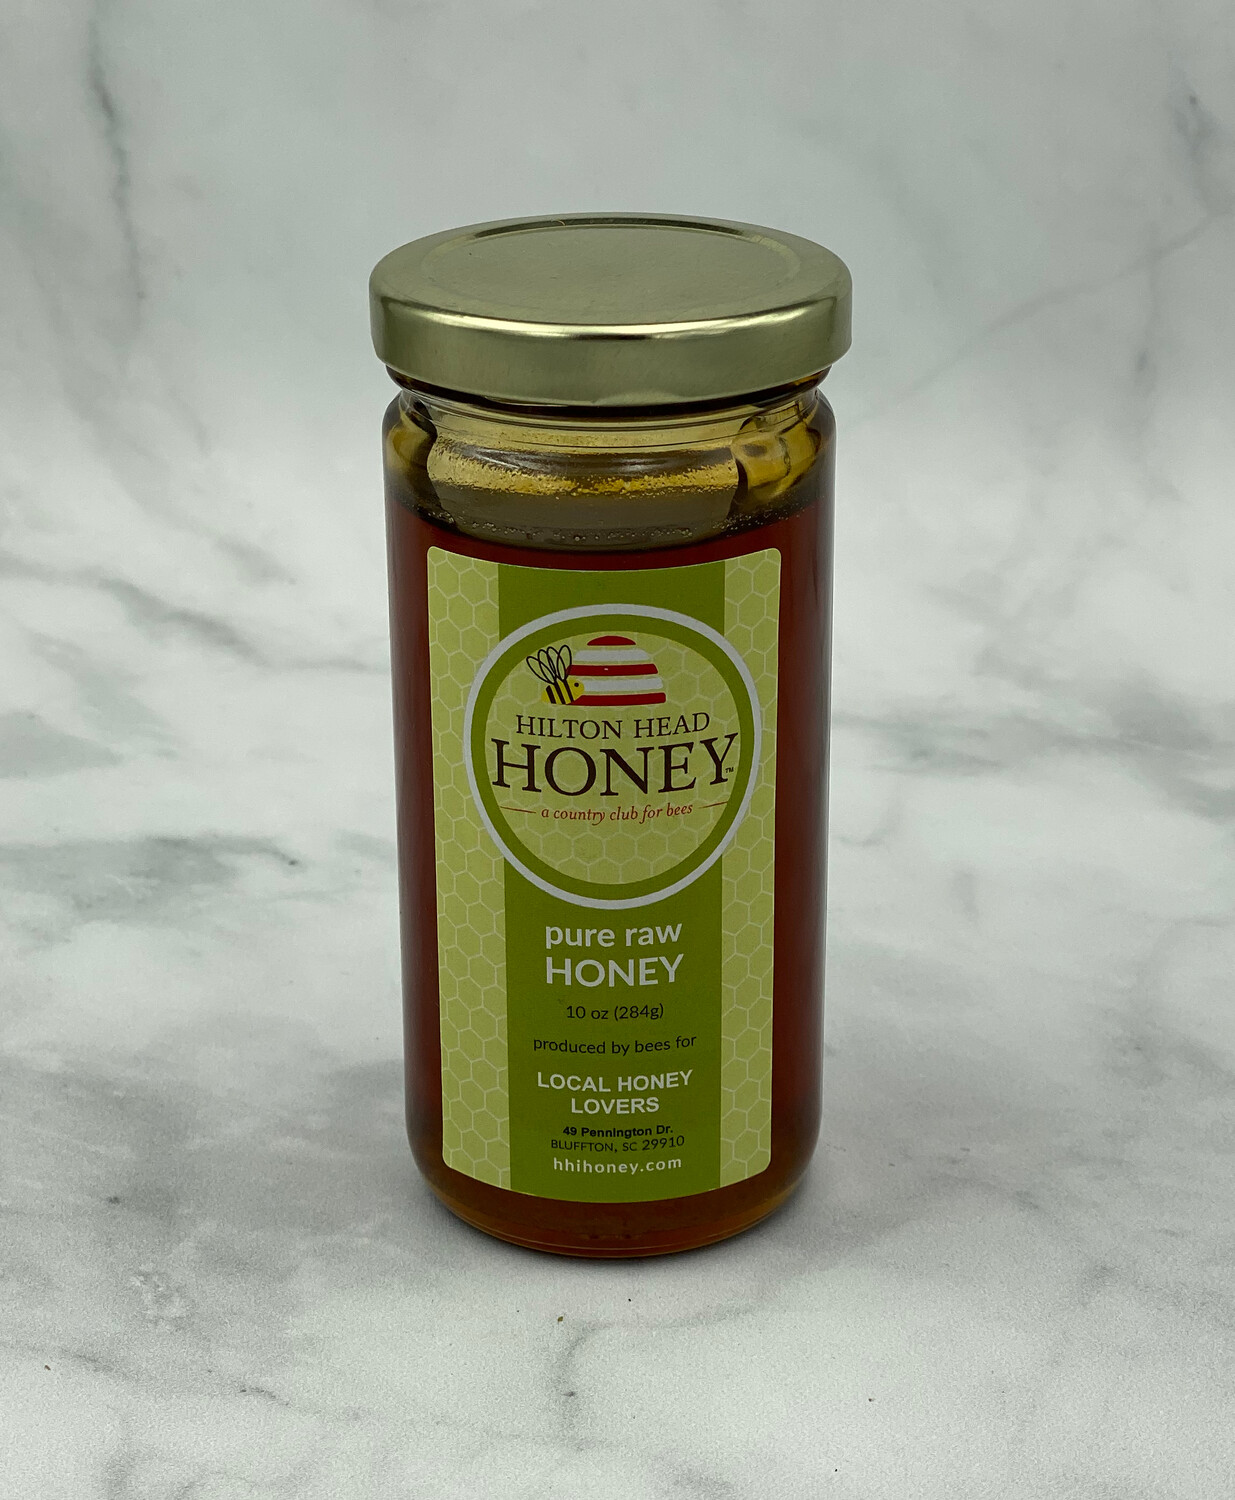 Hilton Head Honey